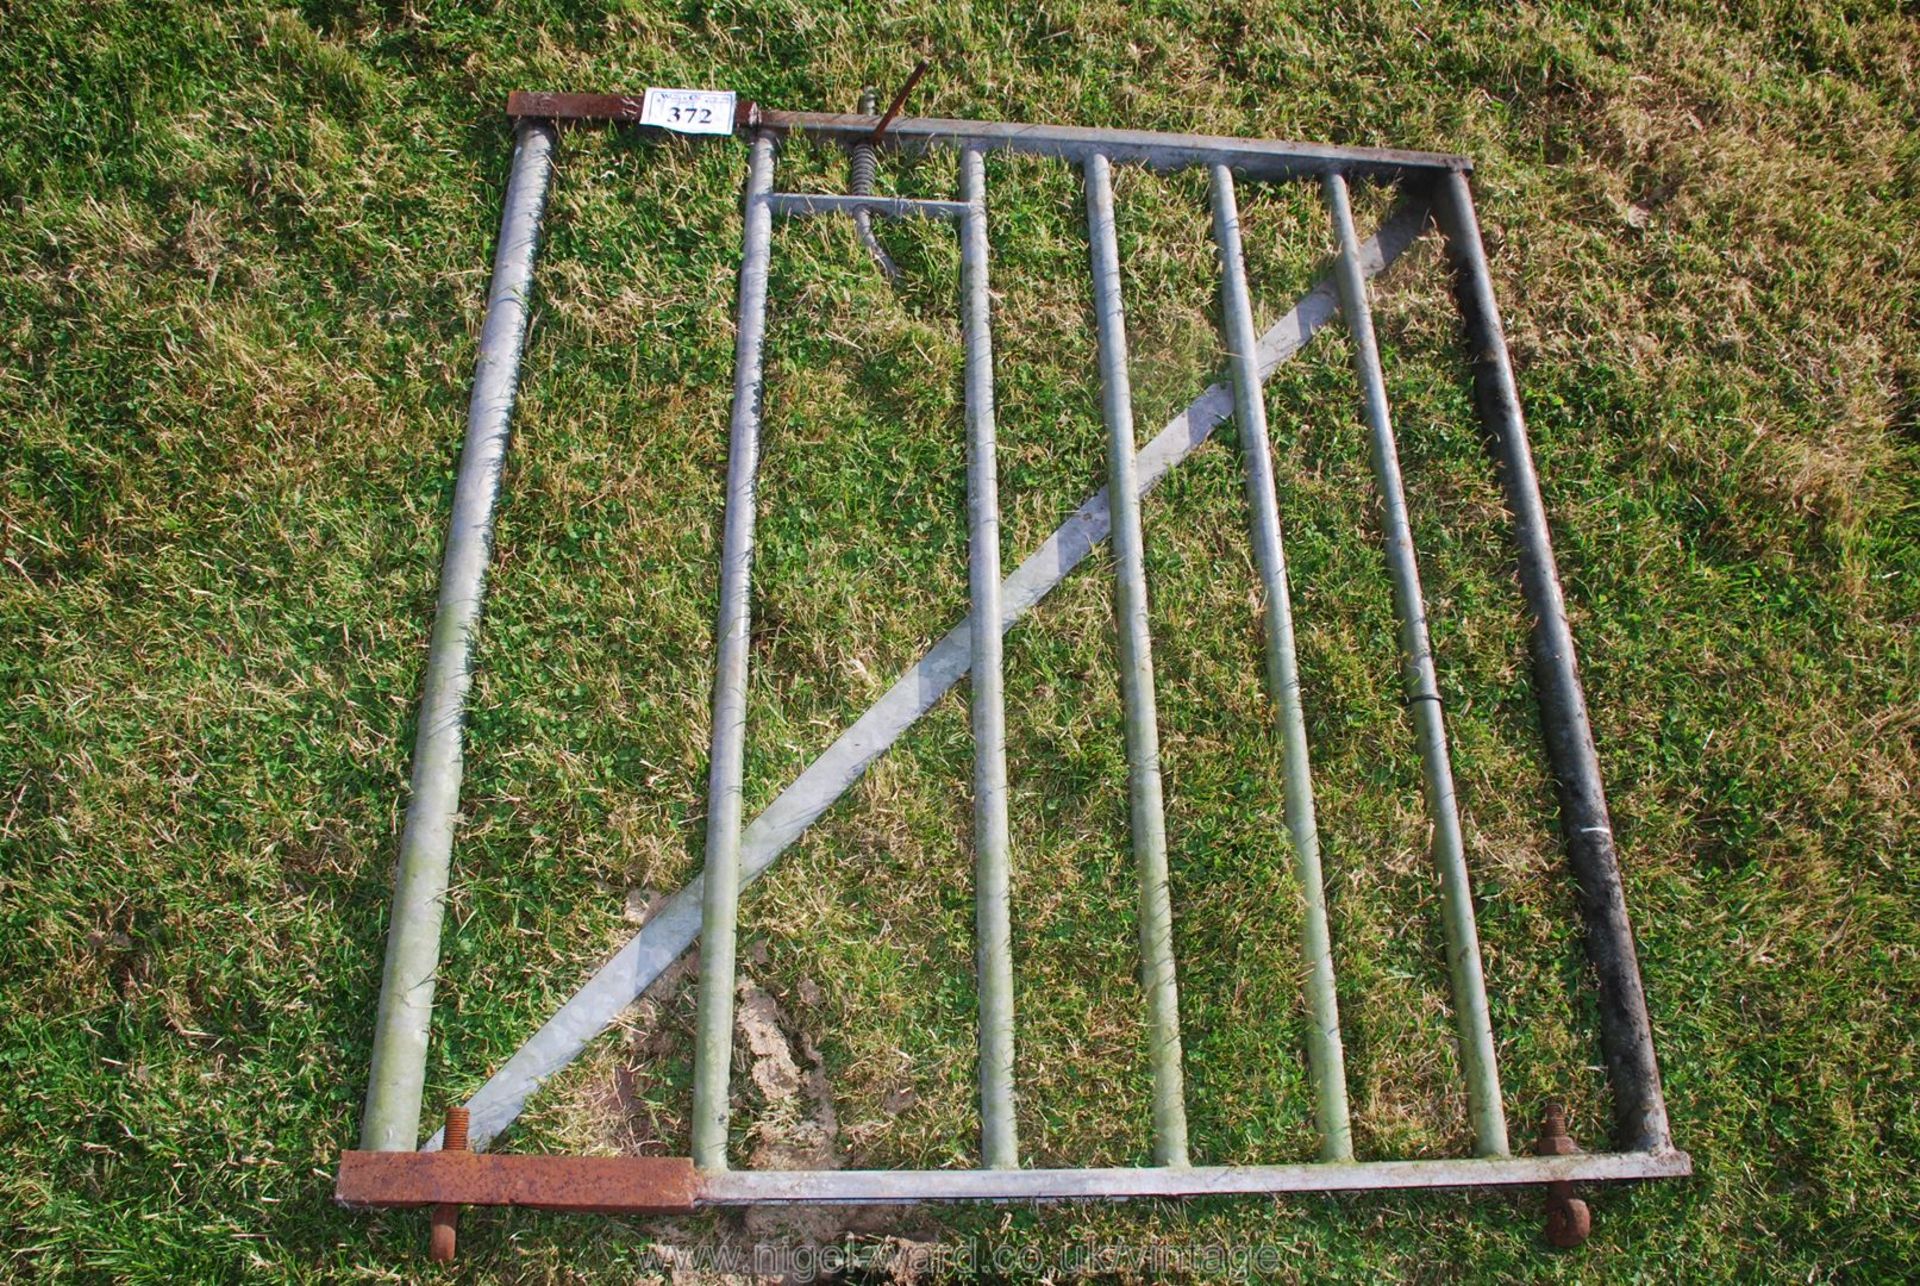 A galvanised field gate 4' x 4'.